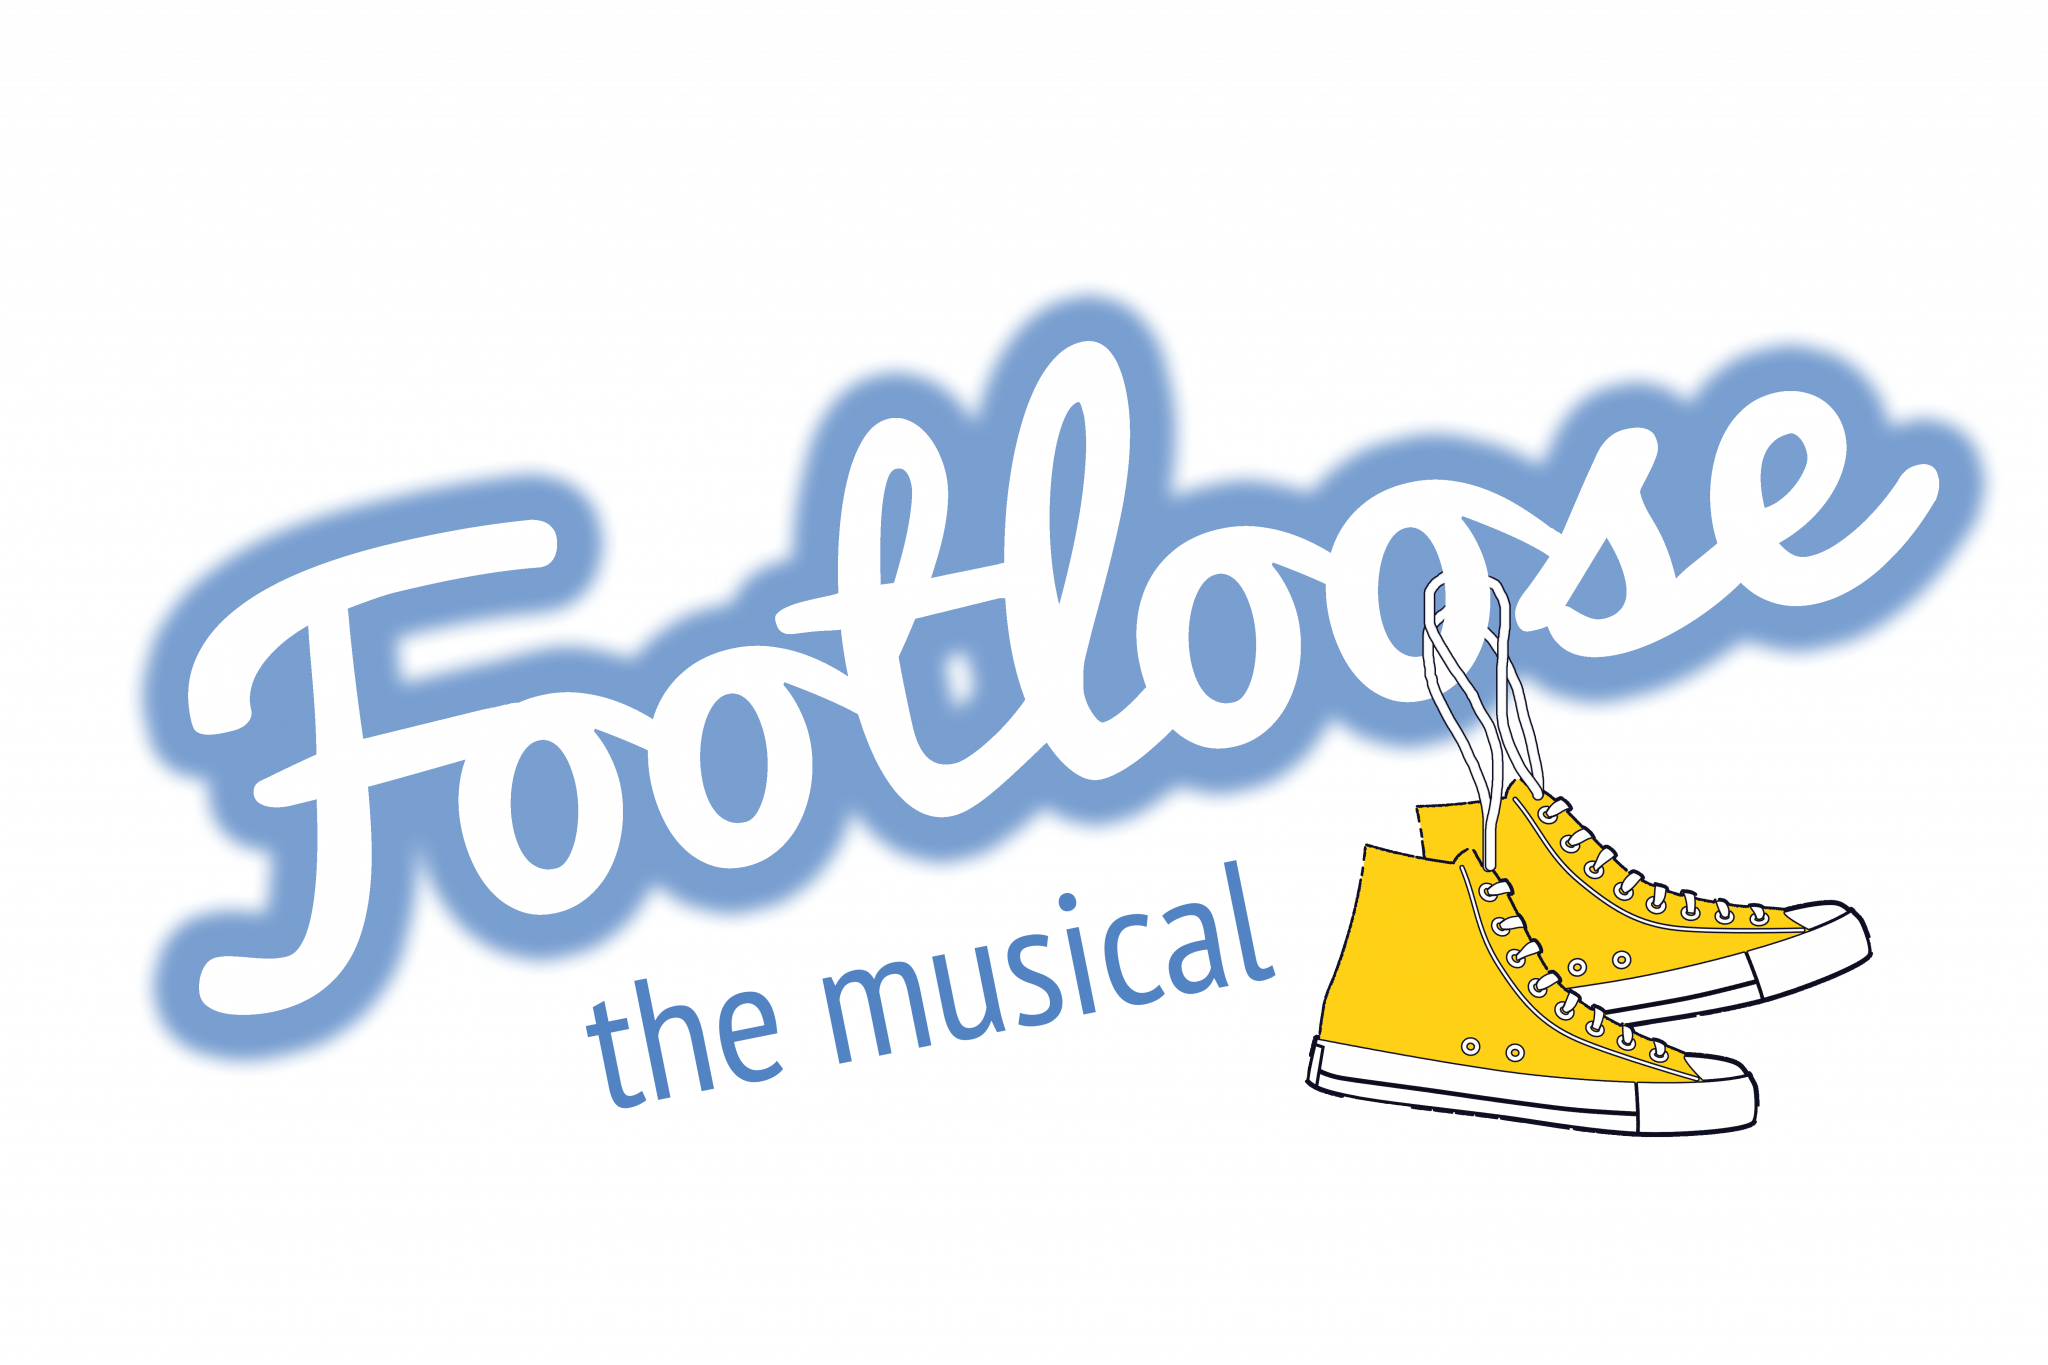 Footloose the Musical logo